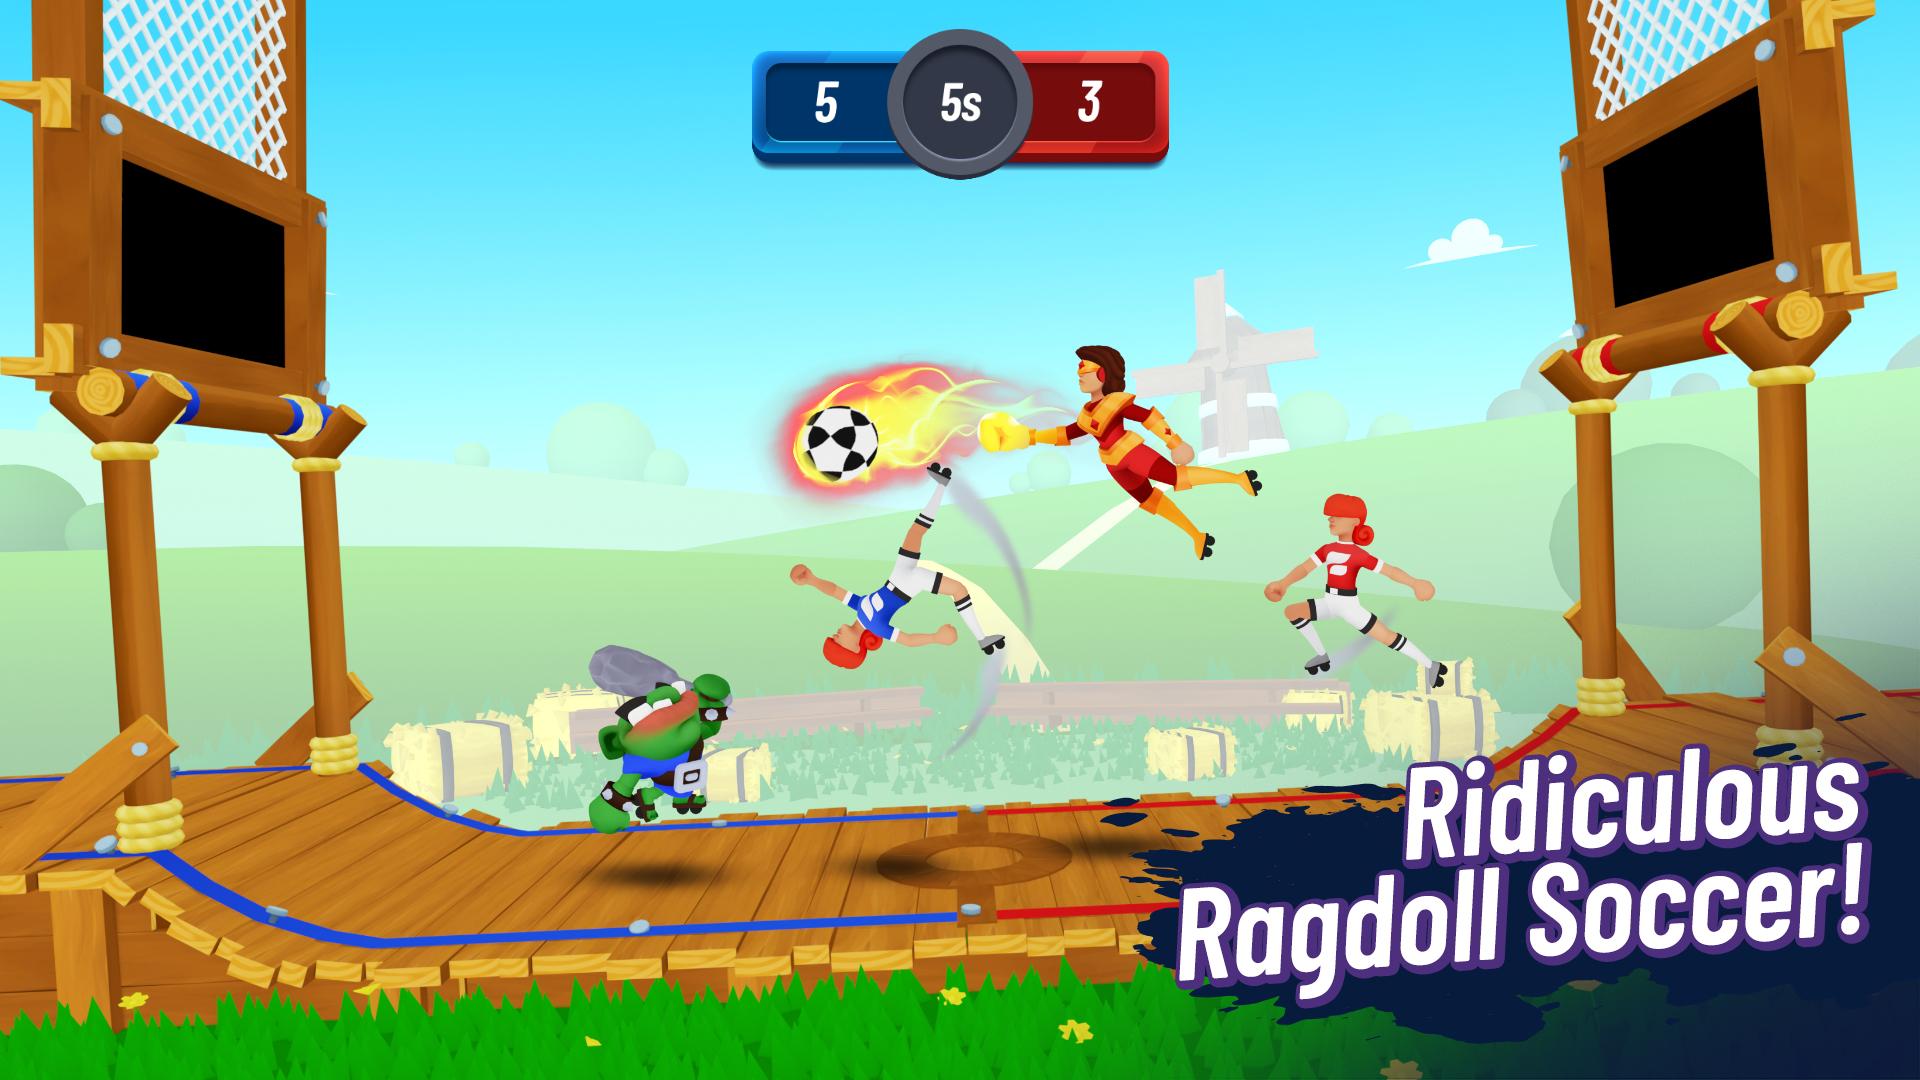 Ballmasters Ridiculous Ragdoll Soccer 0.6.0 Screenshot 1